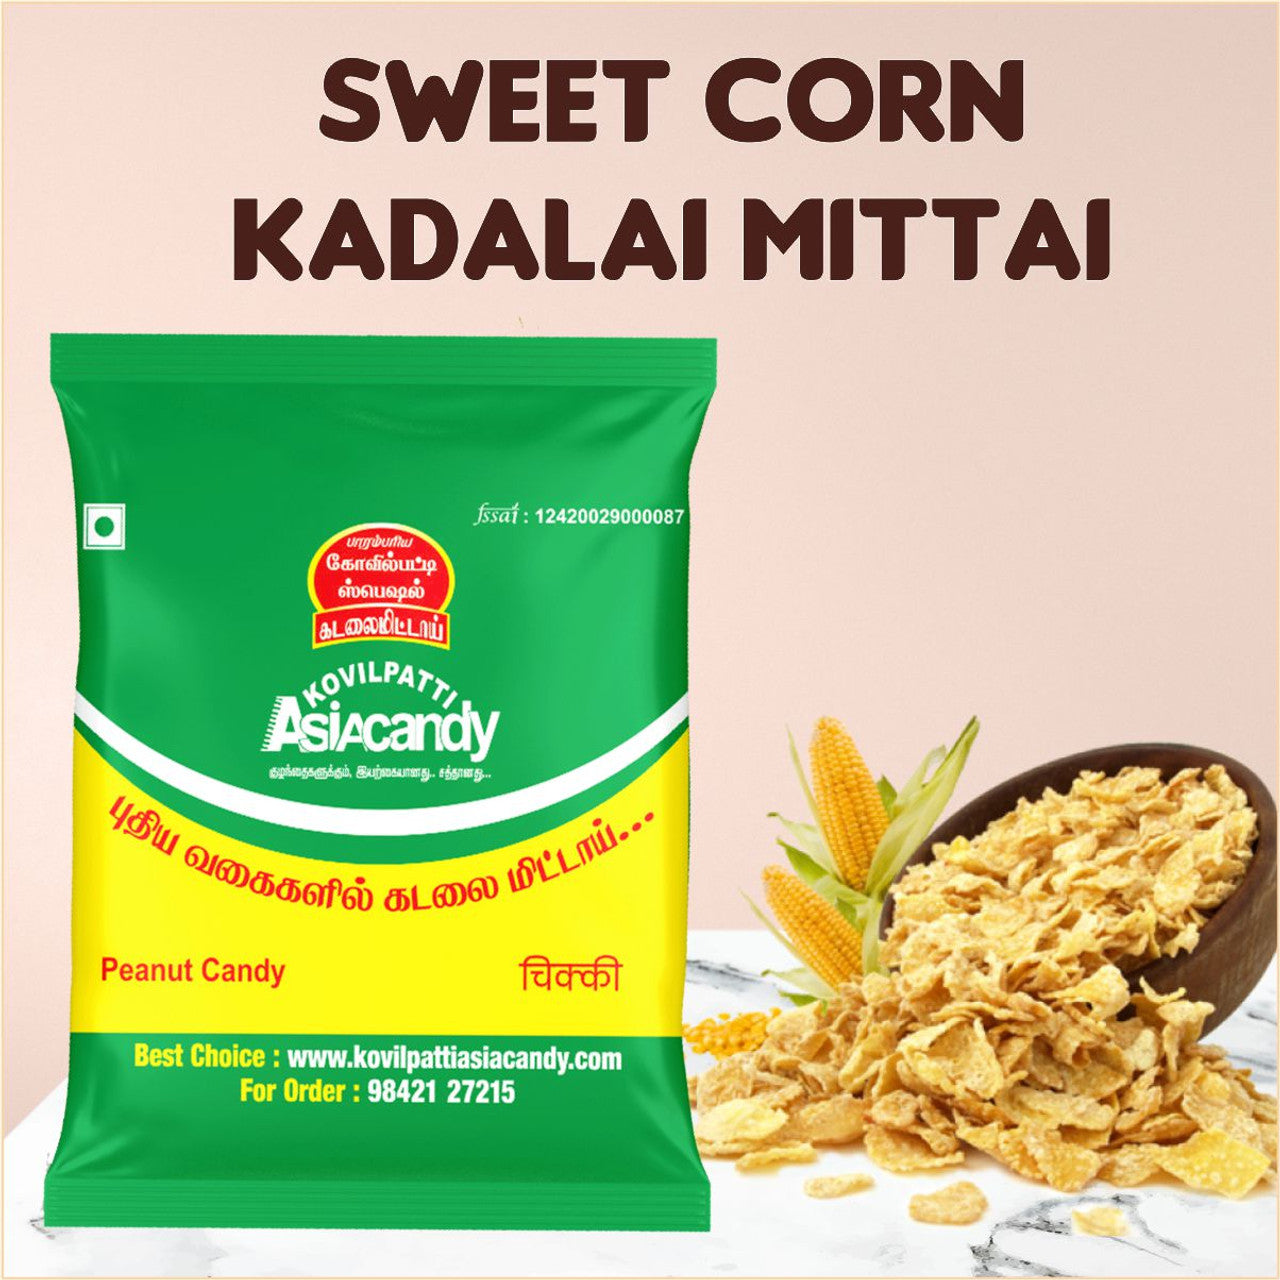 5 rs sweet corn kadalai mittai